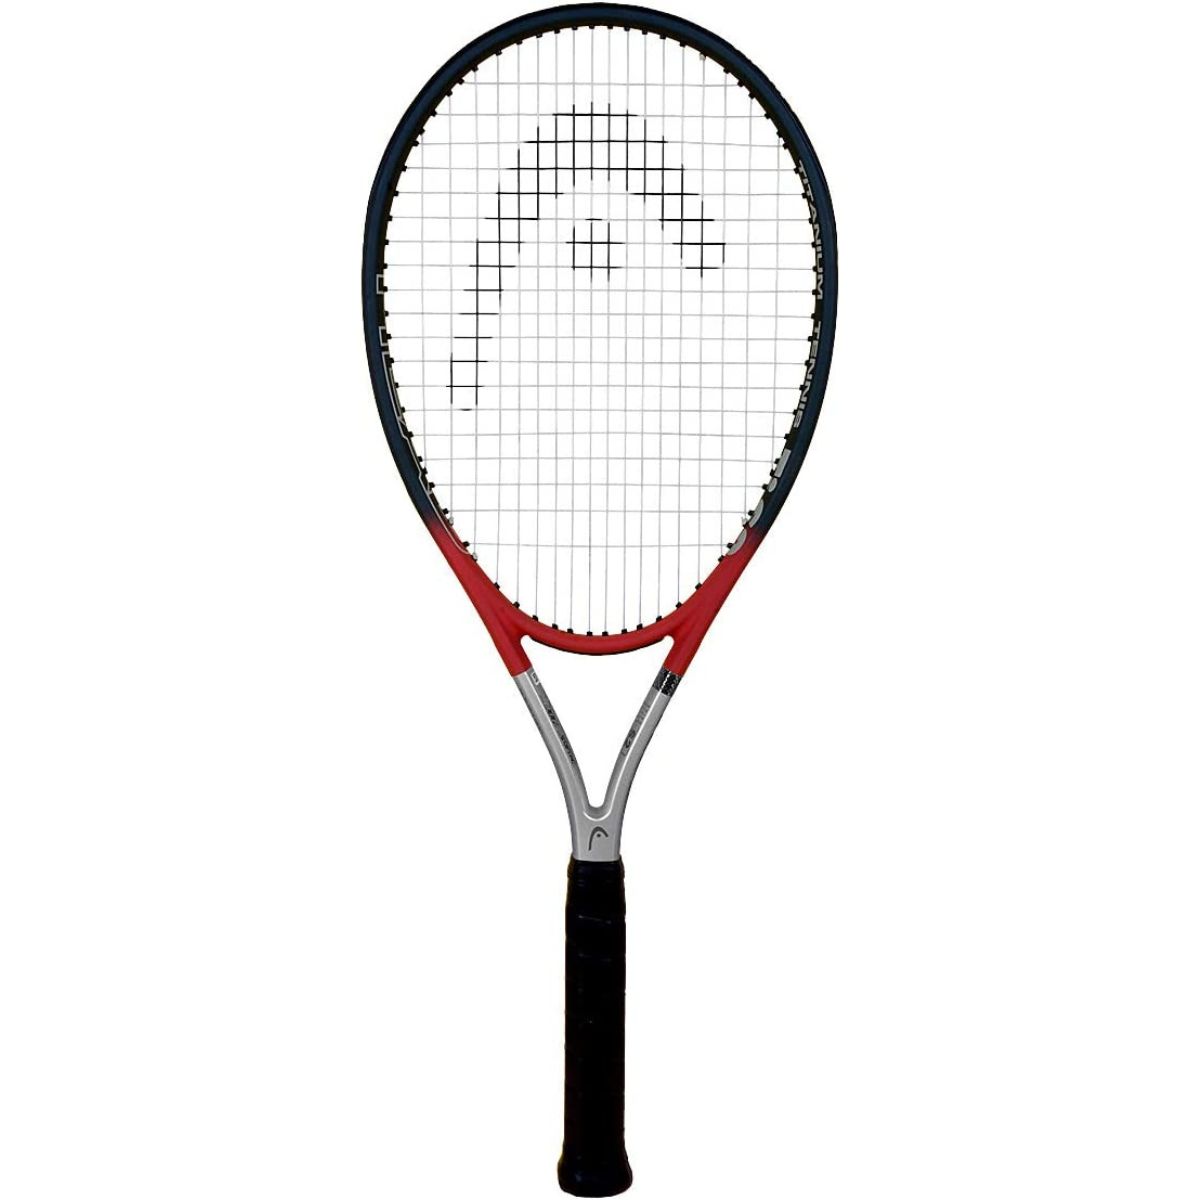 Head Ti S2 tennis racket review